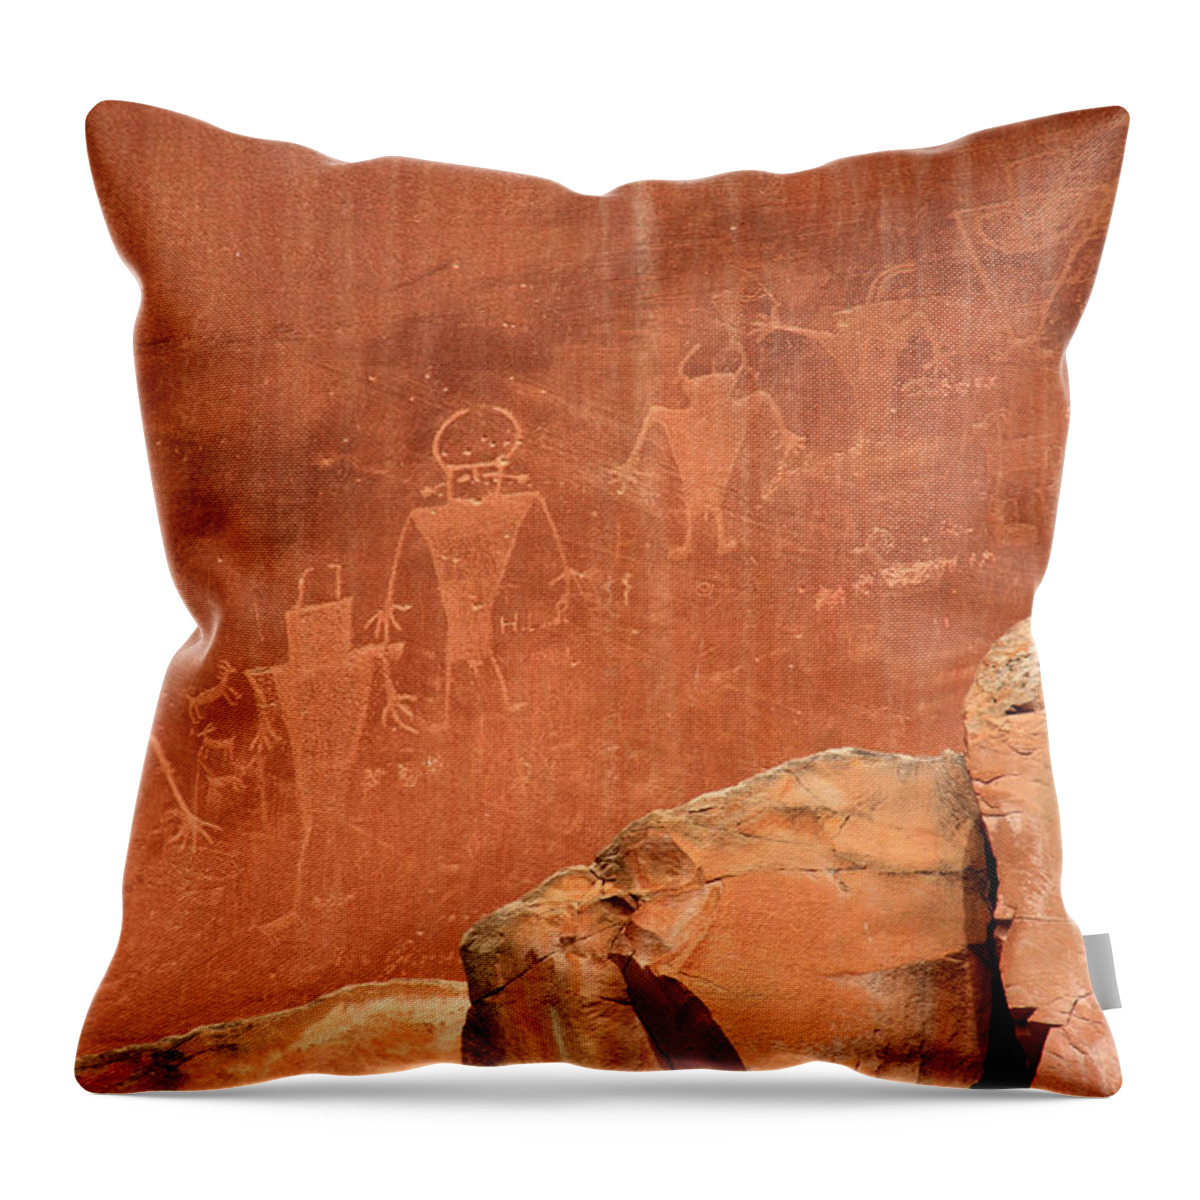 Utah Throw Pillow featuring the photograph Rock Art by Aidan Moran